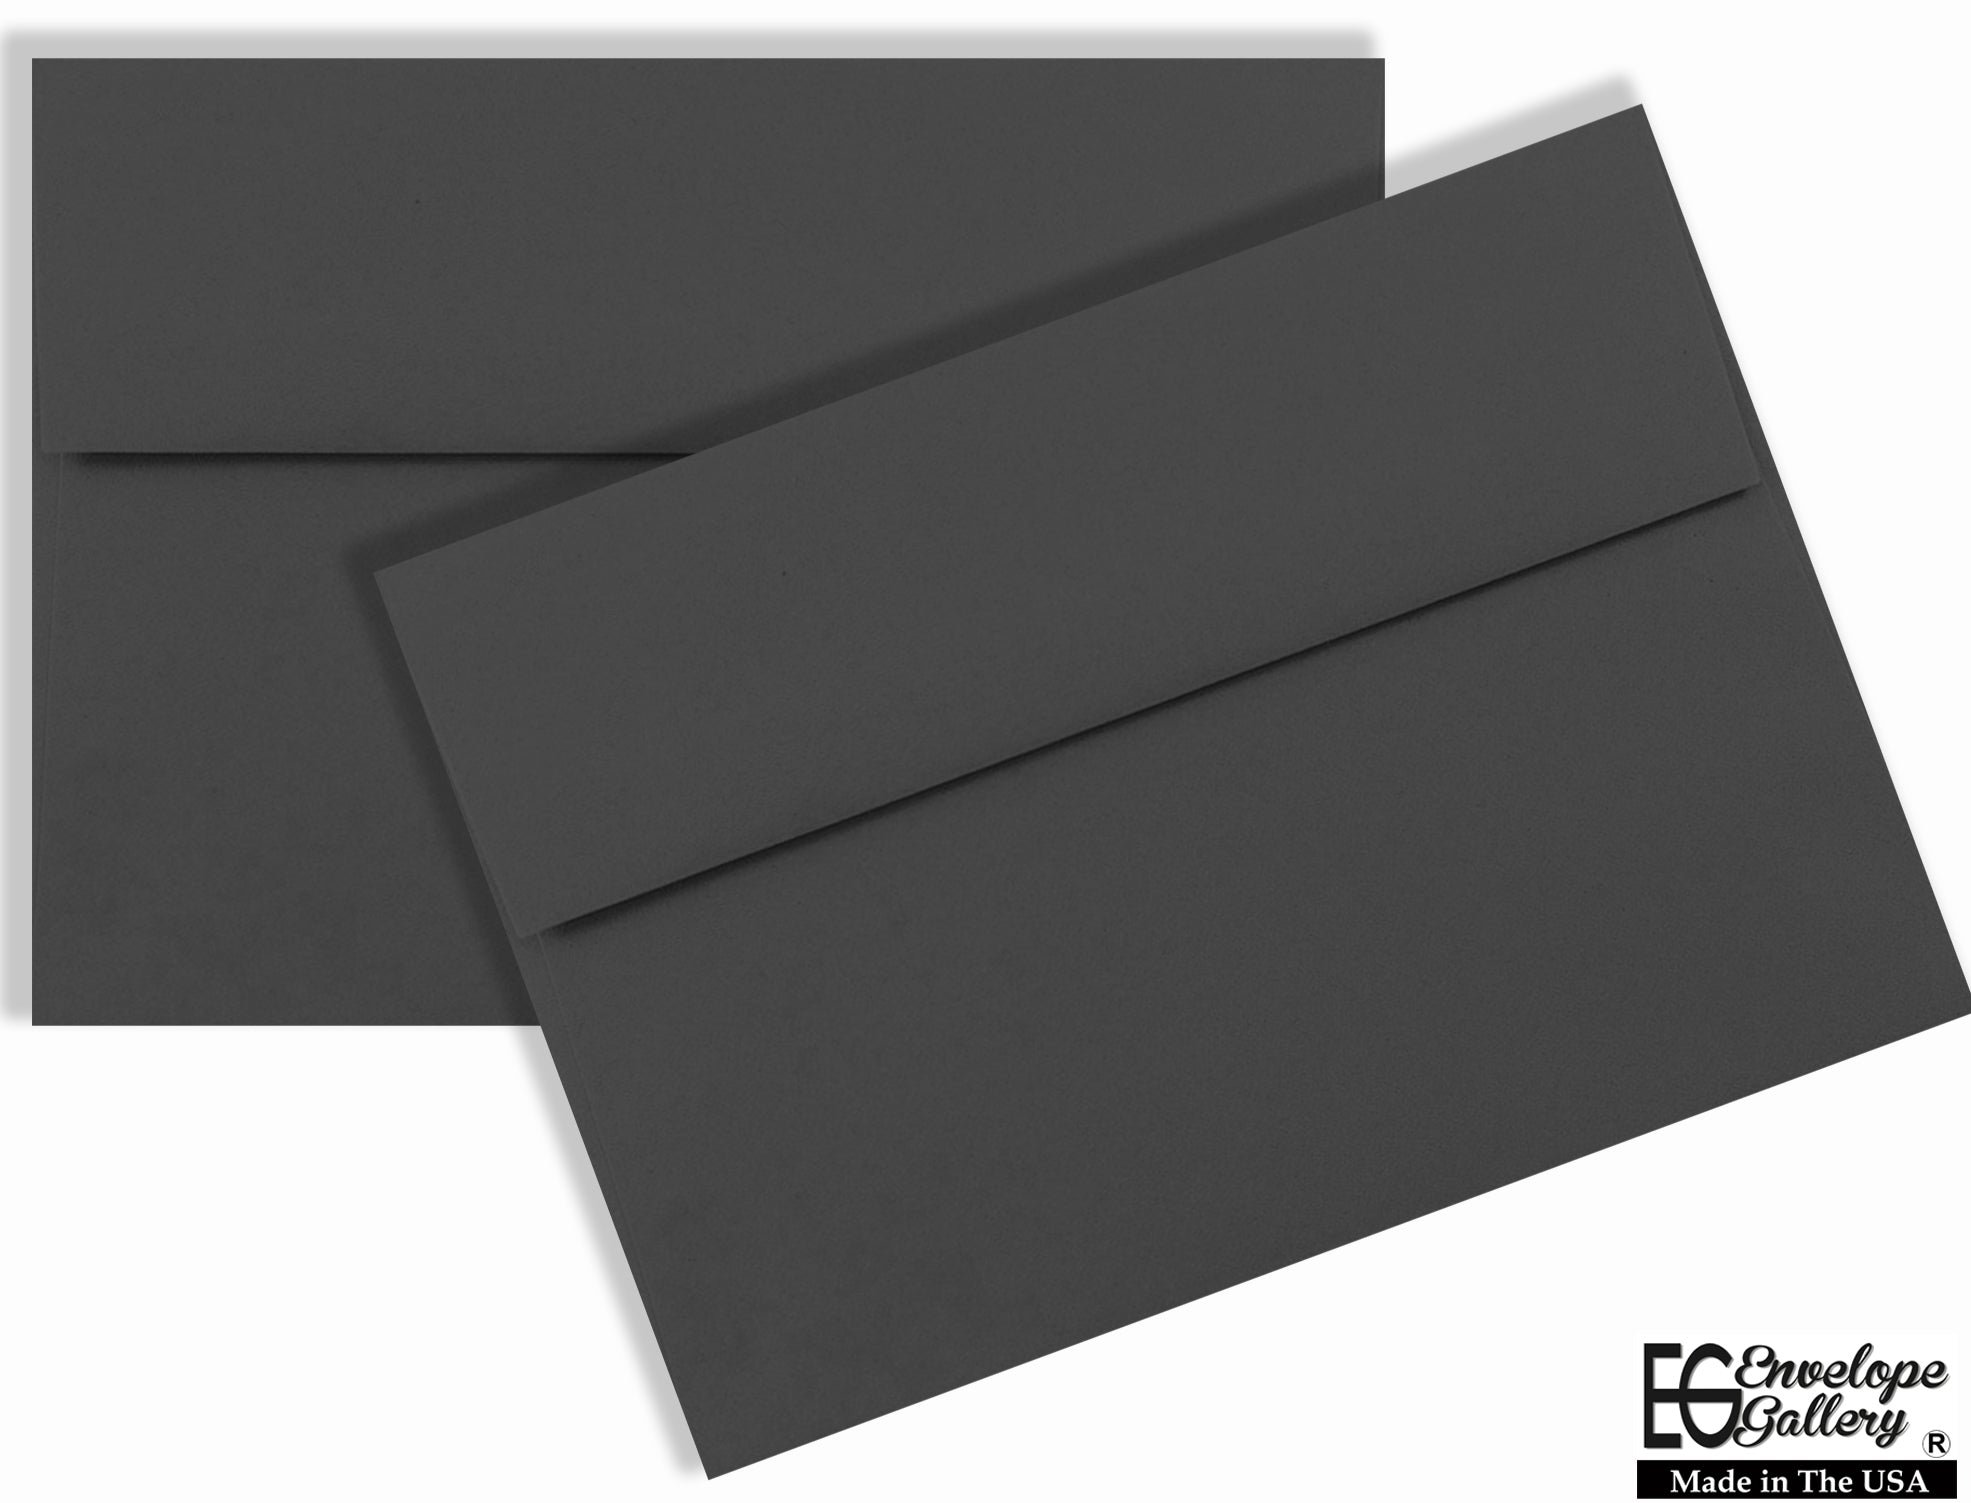 Jet Black 70lb Envelopes perfect for Invitations Announcements